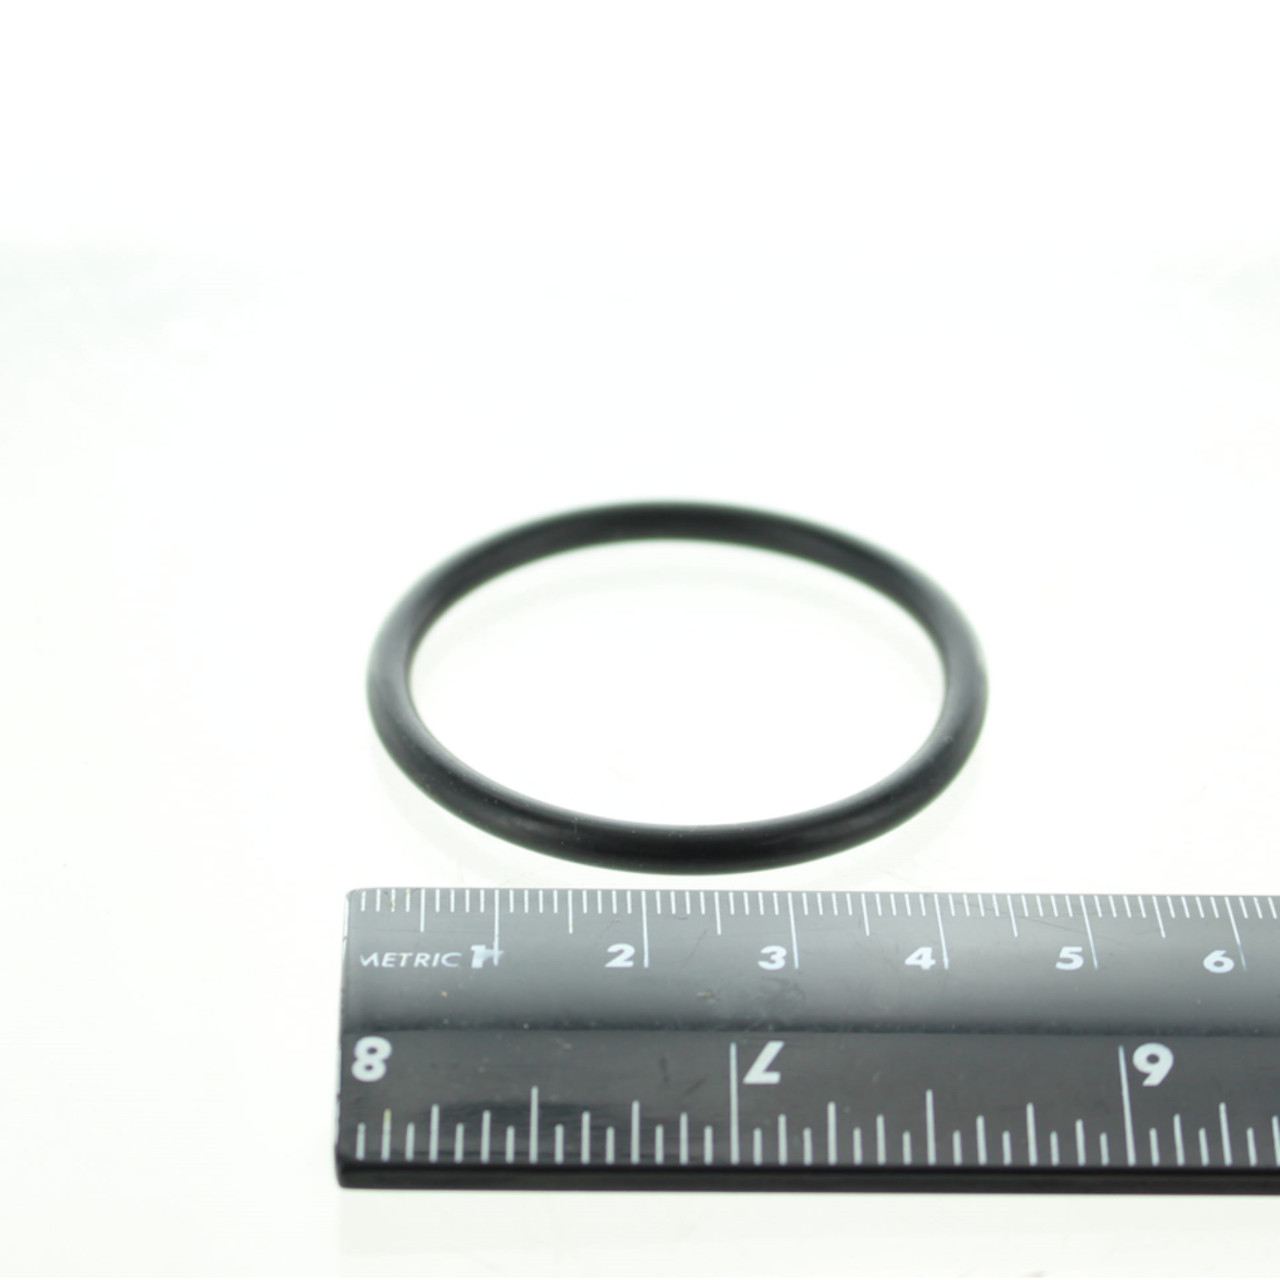 Polaris New OEM Rubber O-Ring Set of 25 1800030